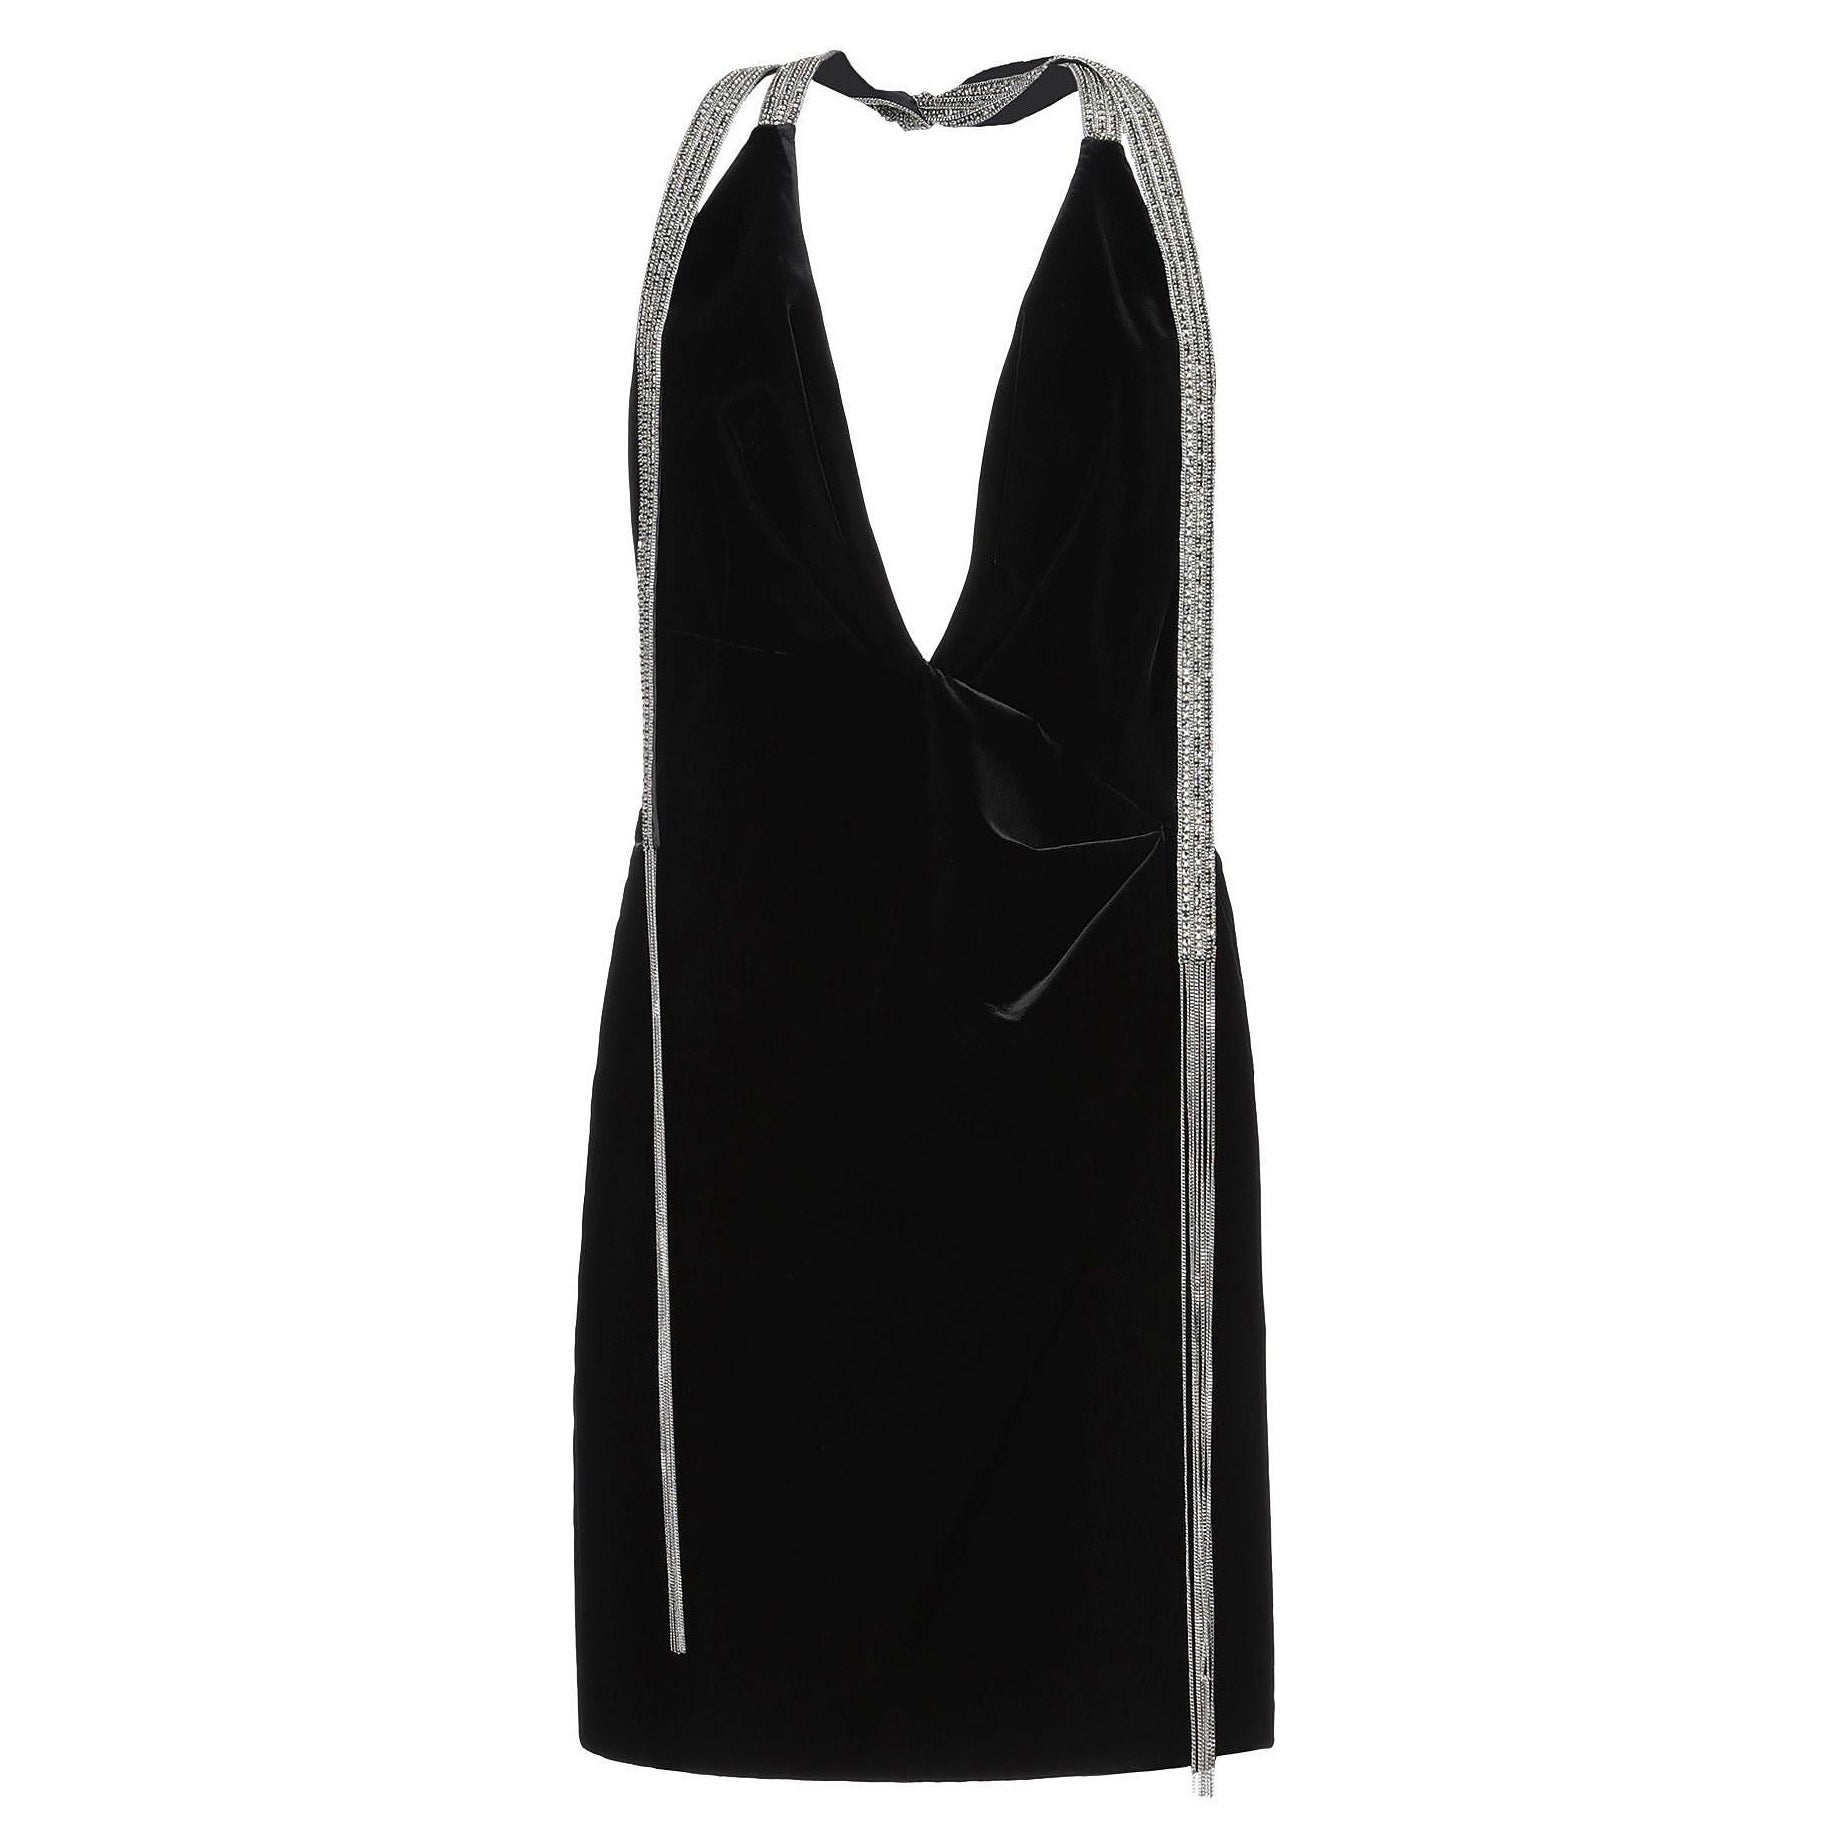 Saint Laurent Plunging Black Velvet Mini Dress with Crystal Straps Size 38